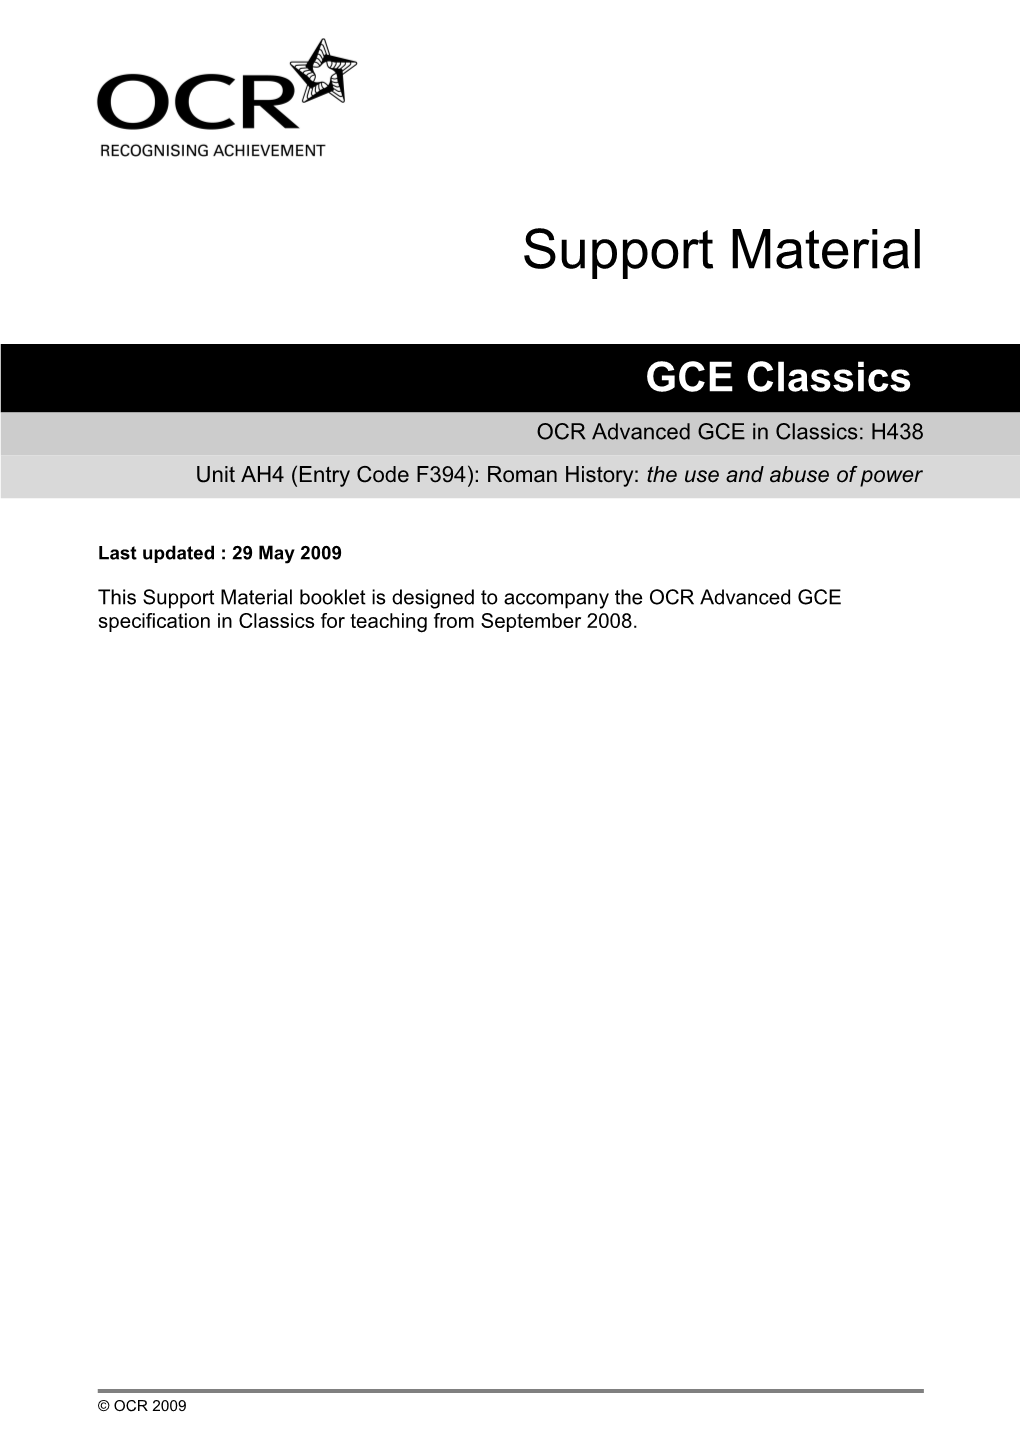 OCR Advanced GCE in Classics: H438